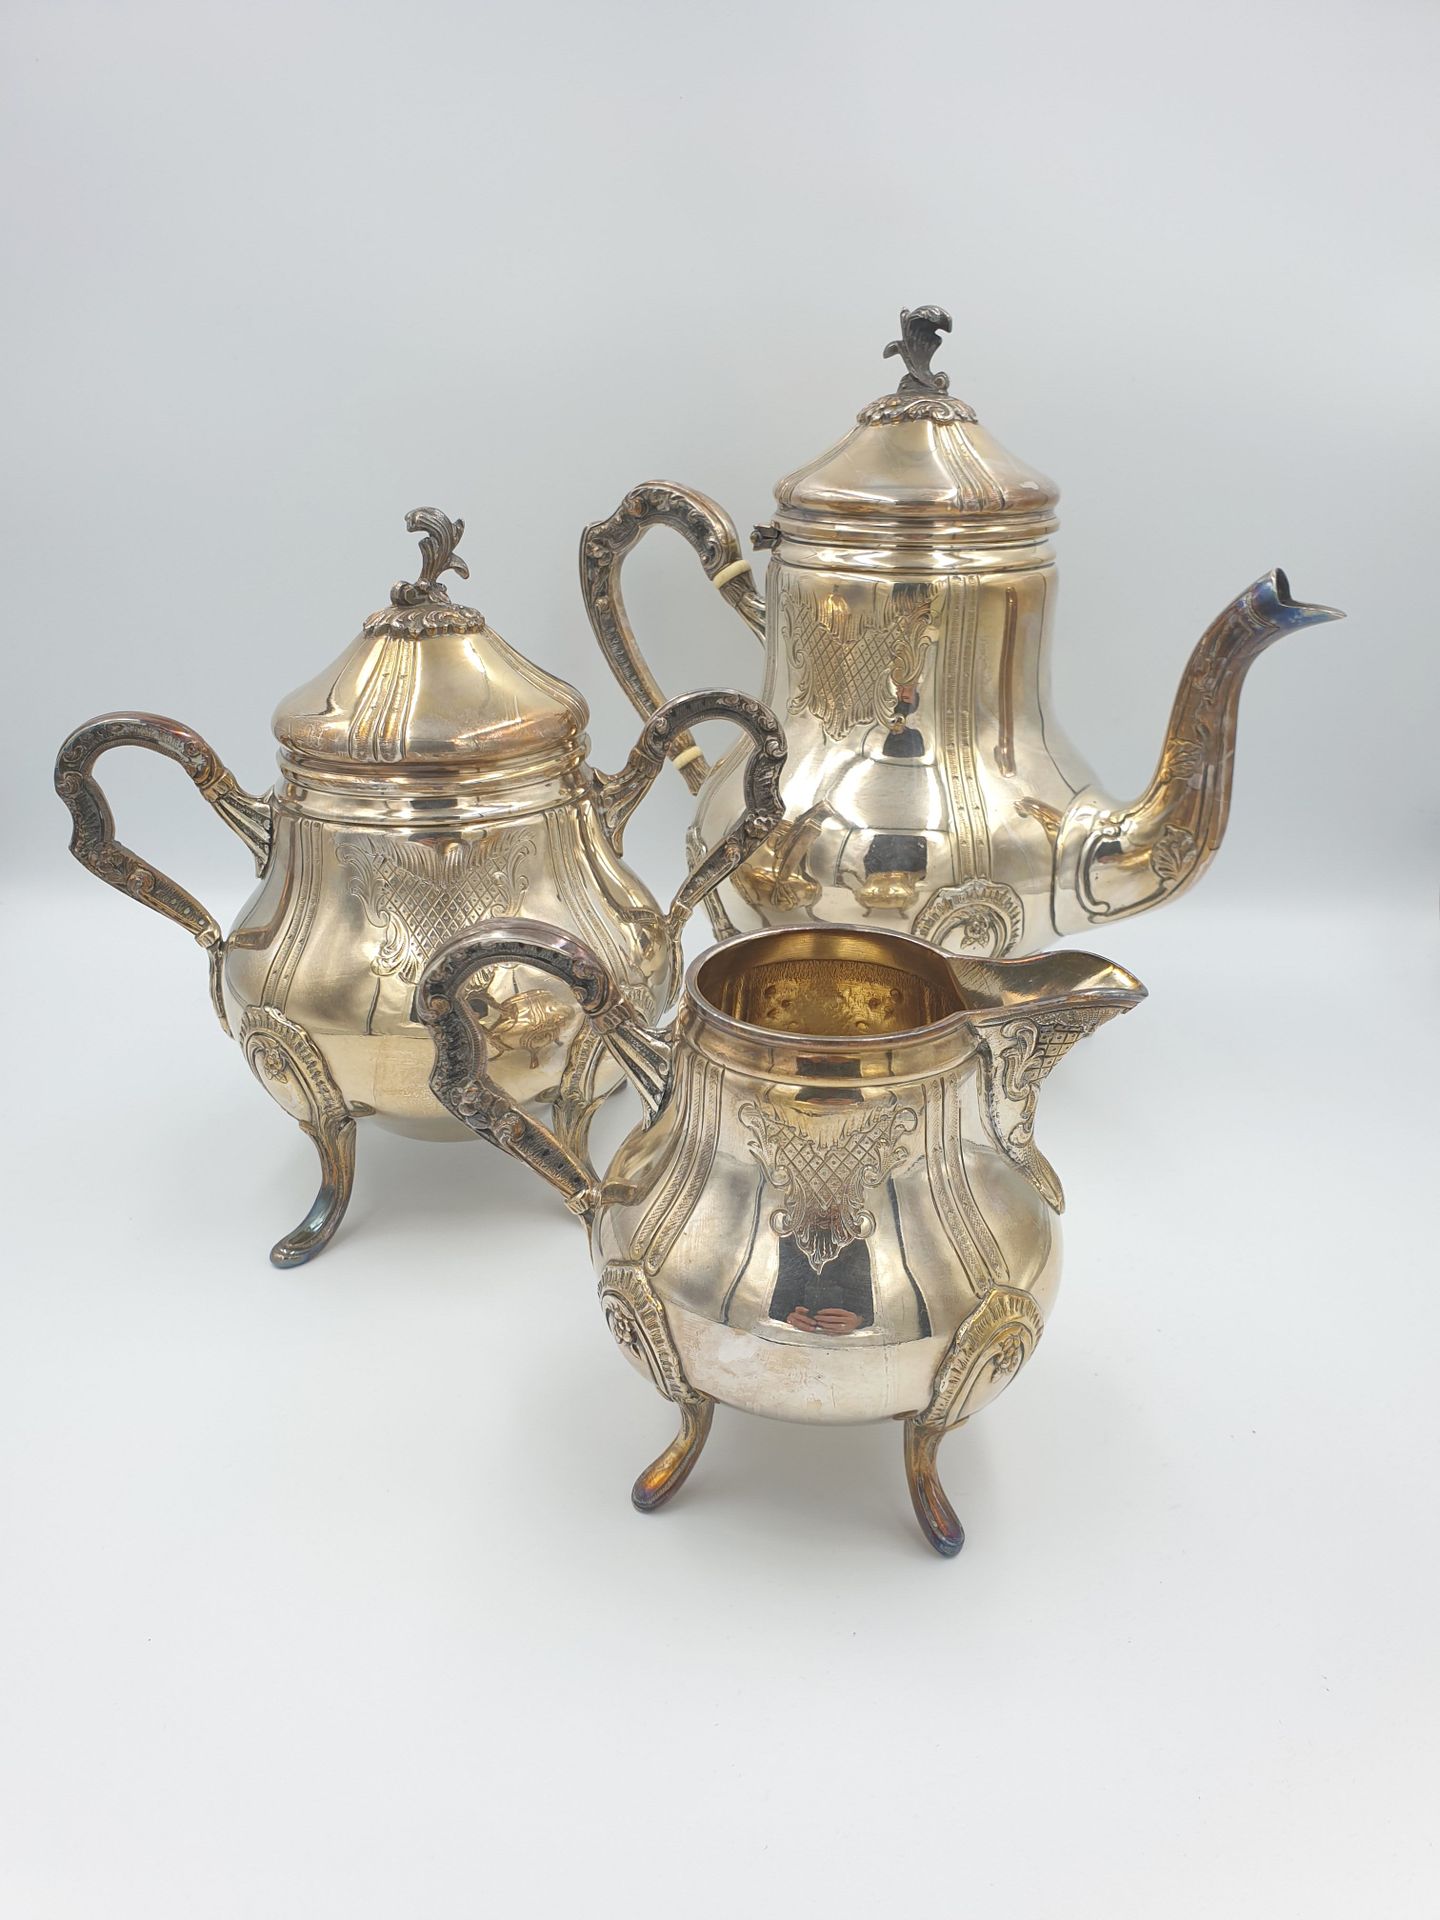 Null 雕刻装饰的镀银茶具，包括一个水壶、一个糖碗和一个牛奶壶

H.23厘米